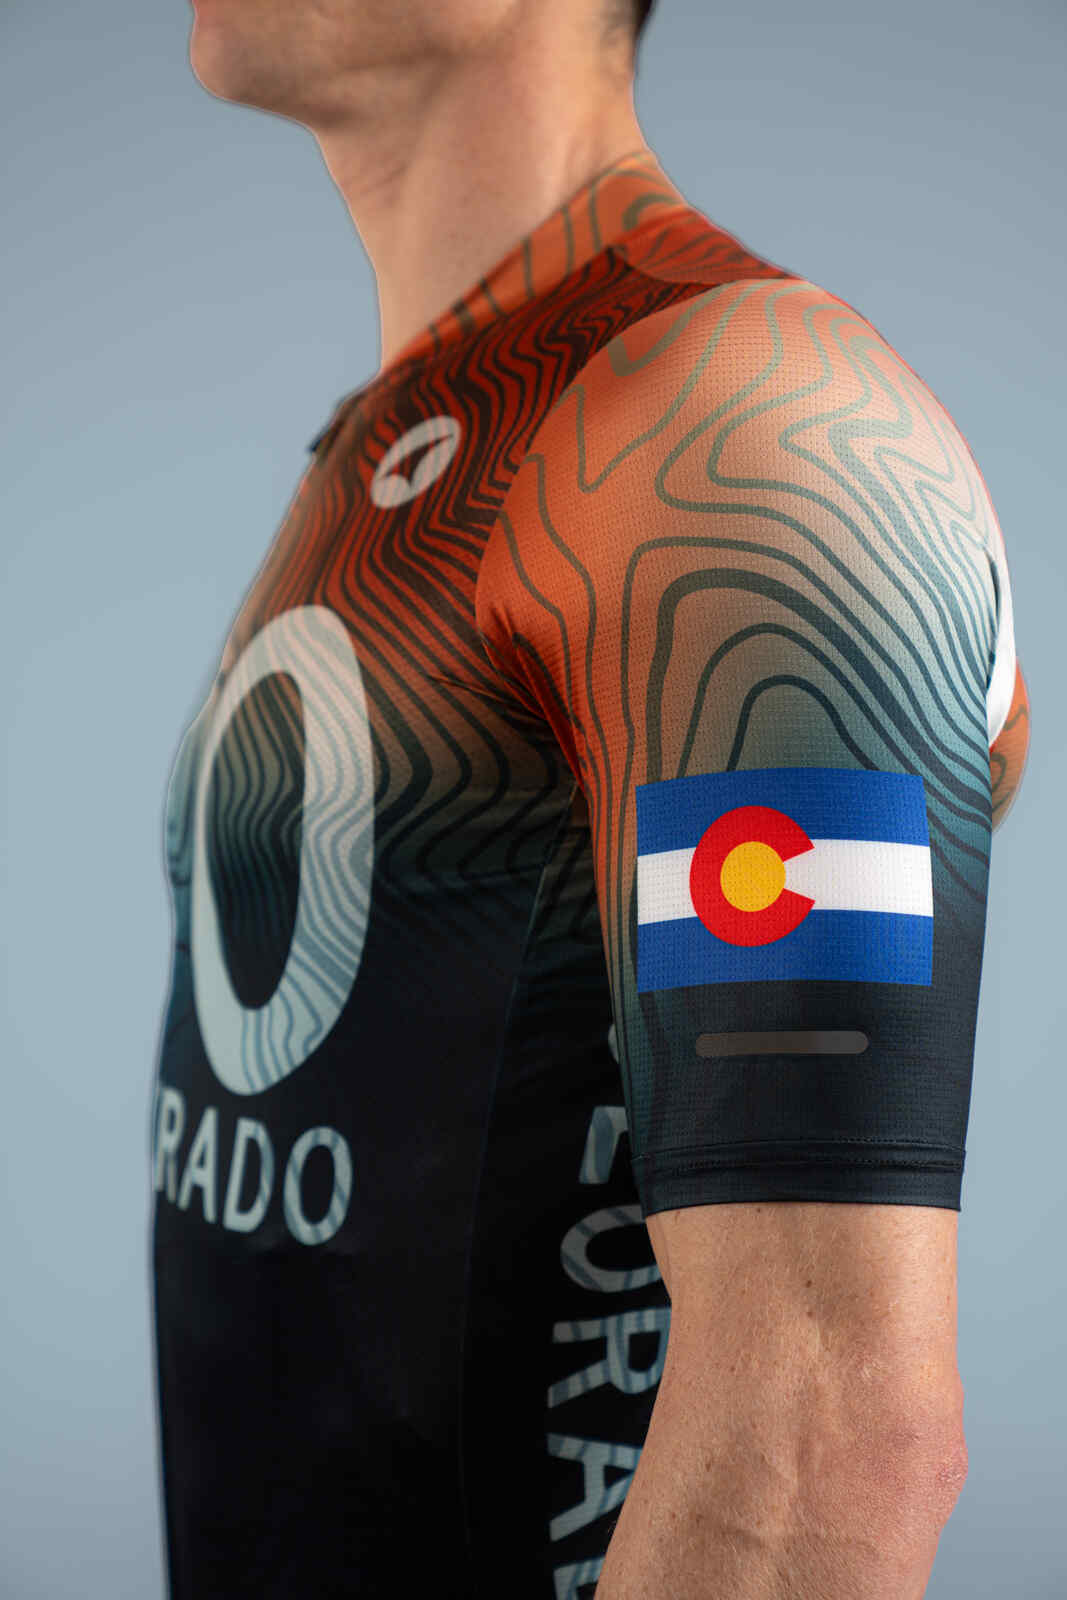 Men's Colorado Geo Cycling Jersey - Ascent Aero Sleeve Close-Up